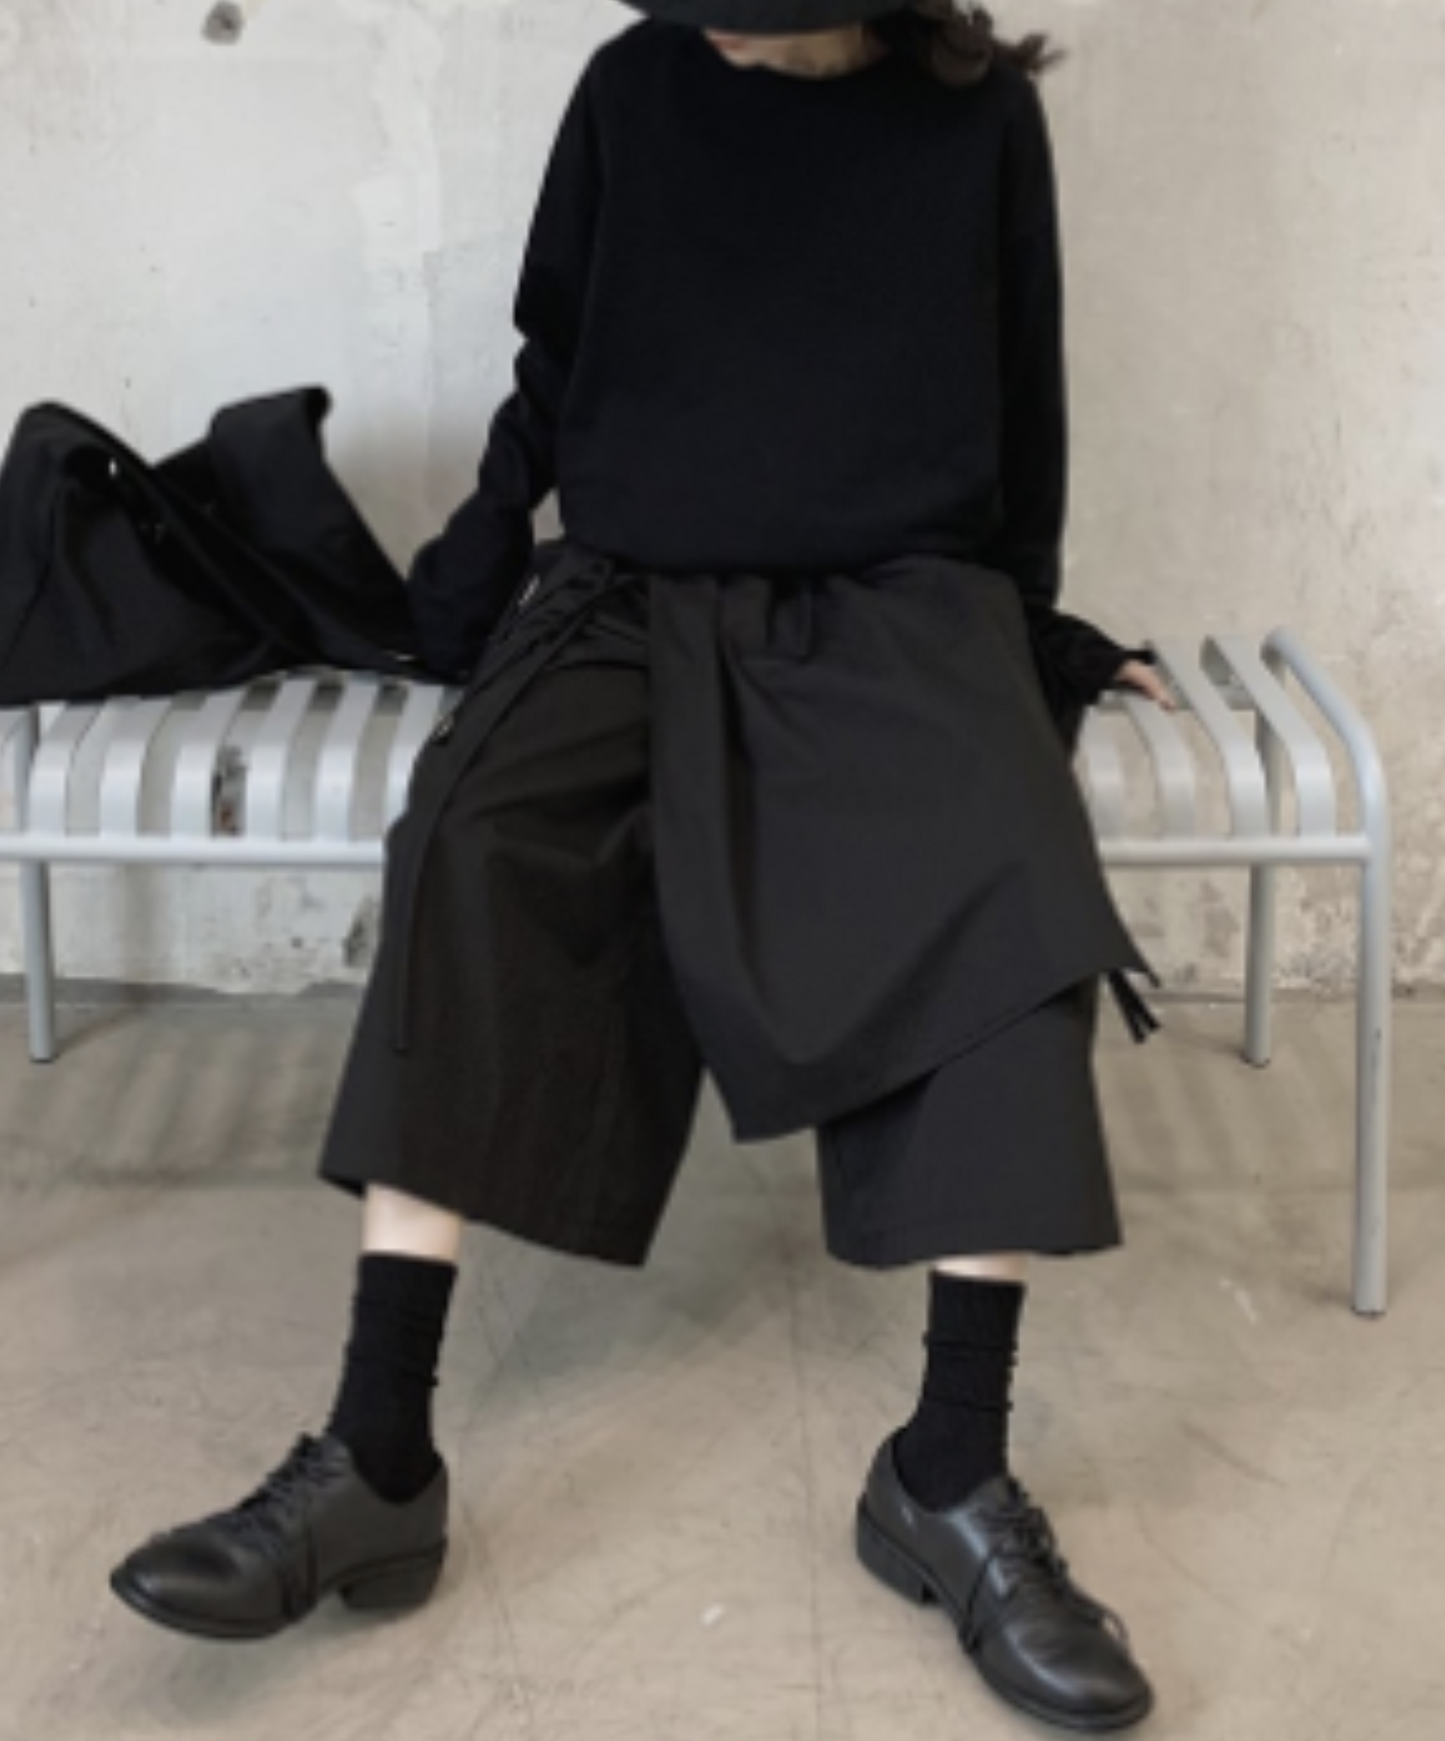 dark wide layered hakama pants EN1124